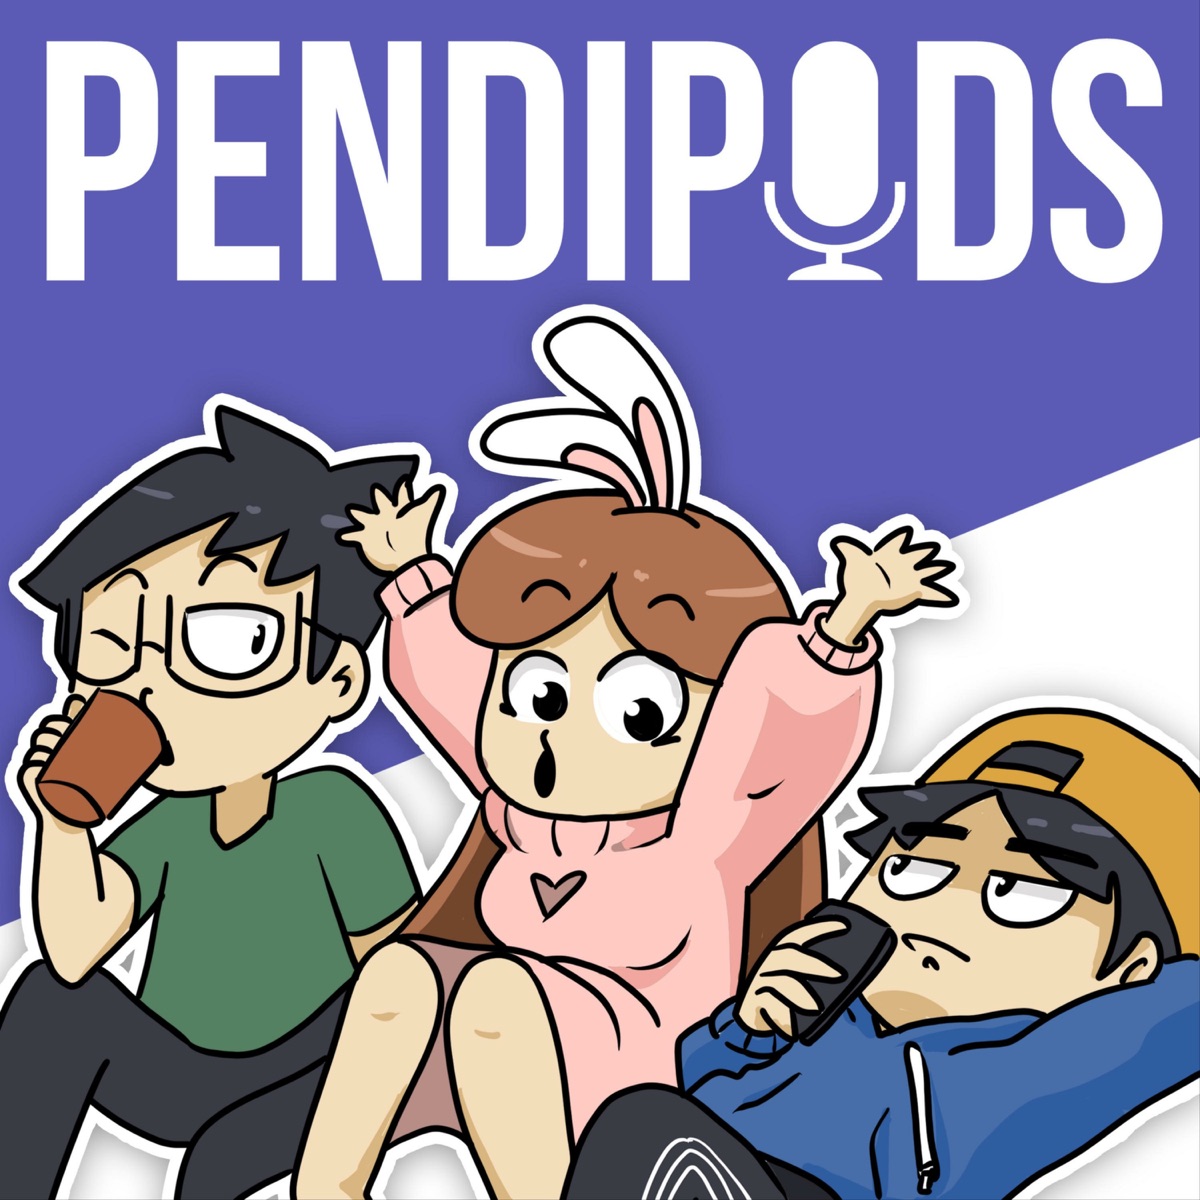 Pod Falar de Webtoon – Podcast – Podtail